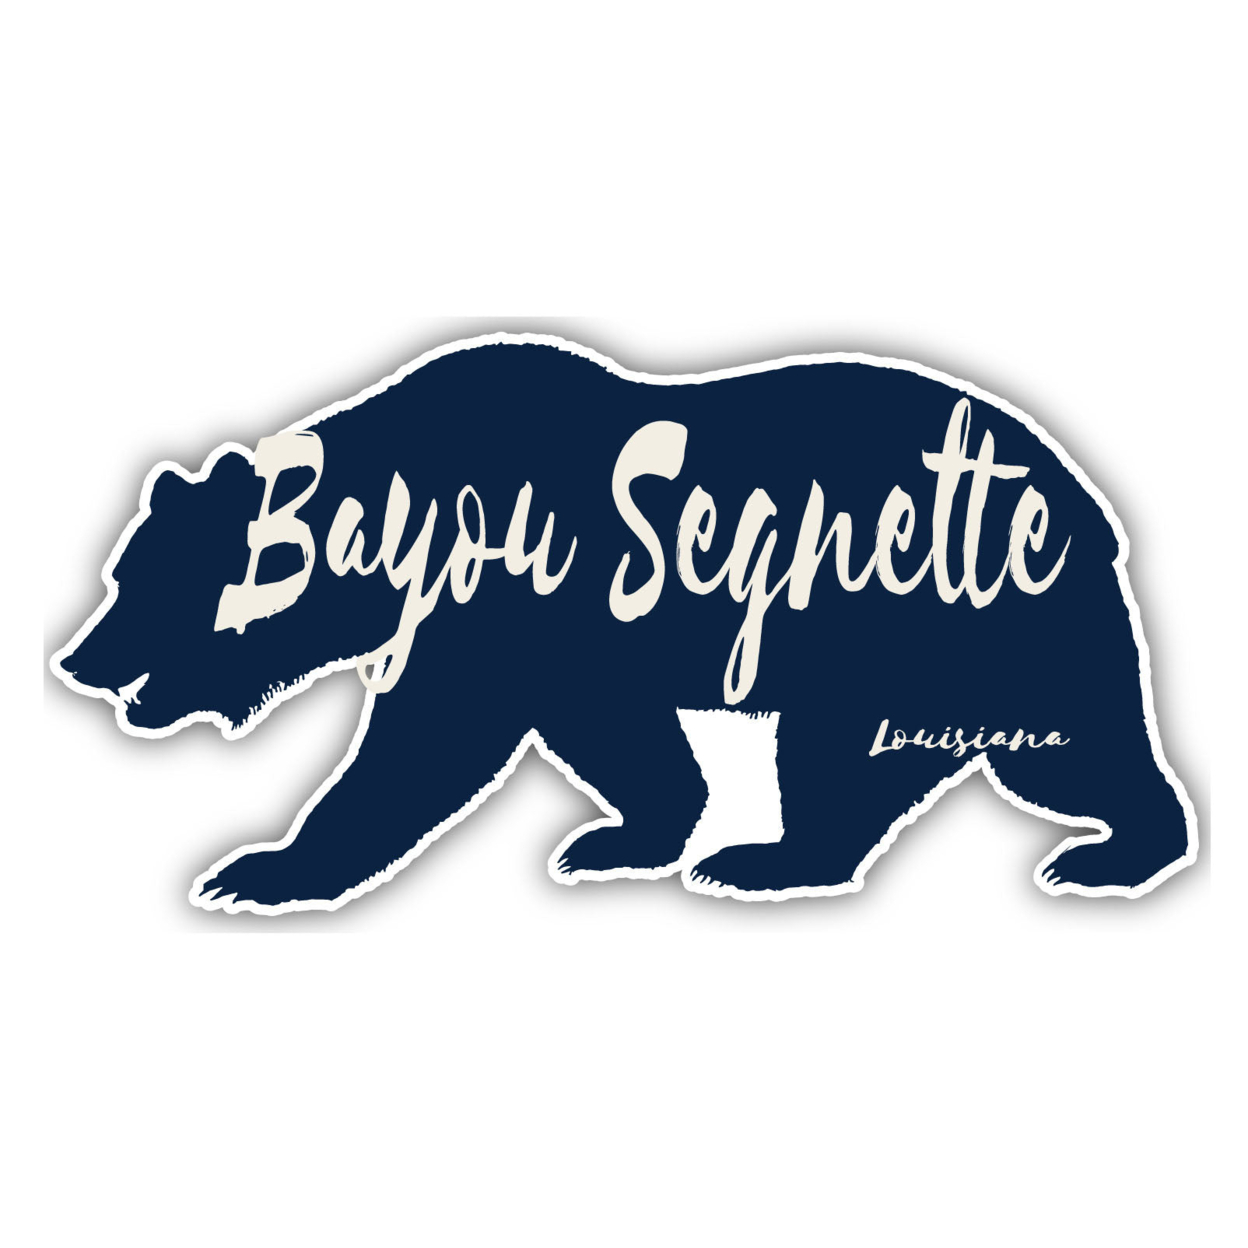 Bayou Segnette Louisiana Souvenir Decorative Stickers (Choose Theme And Size) - Single Unit, 2-Inch, Bear